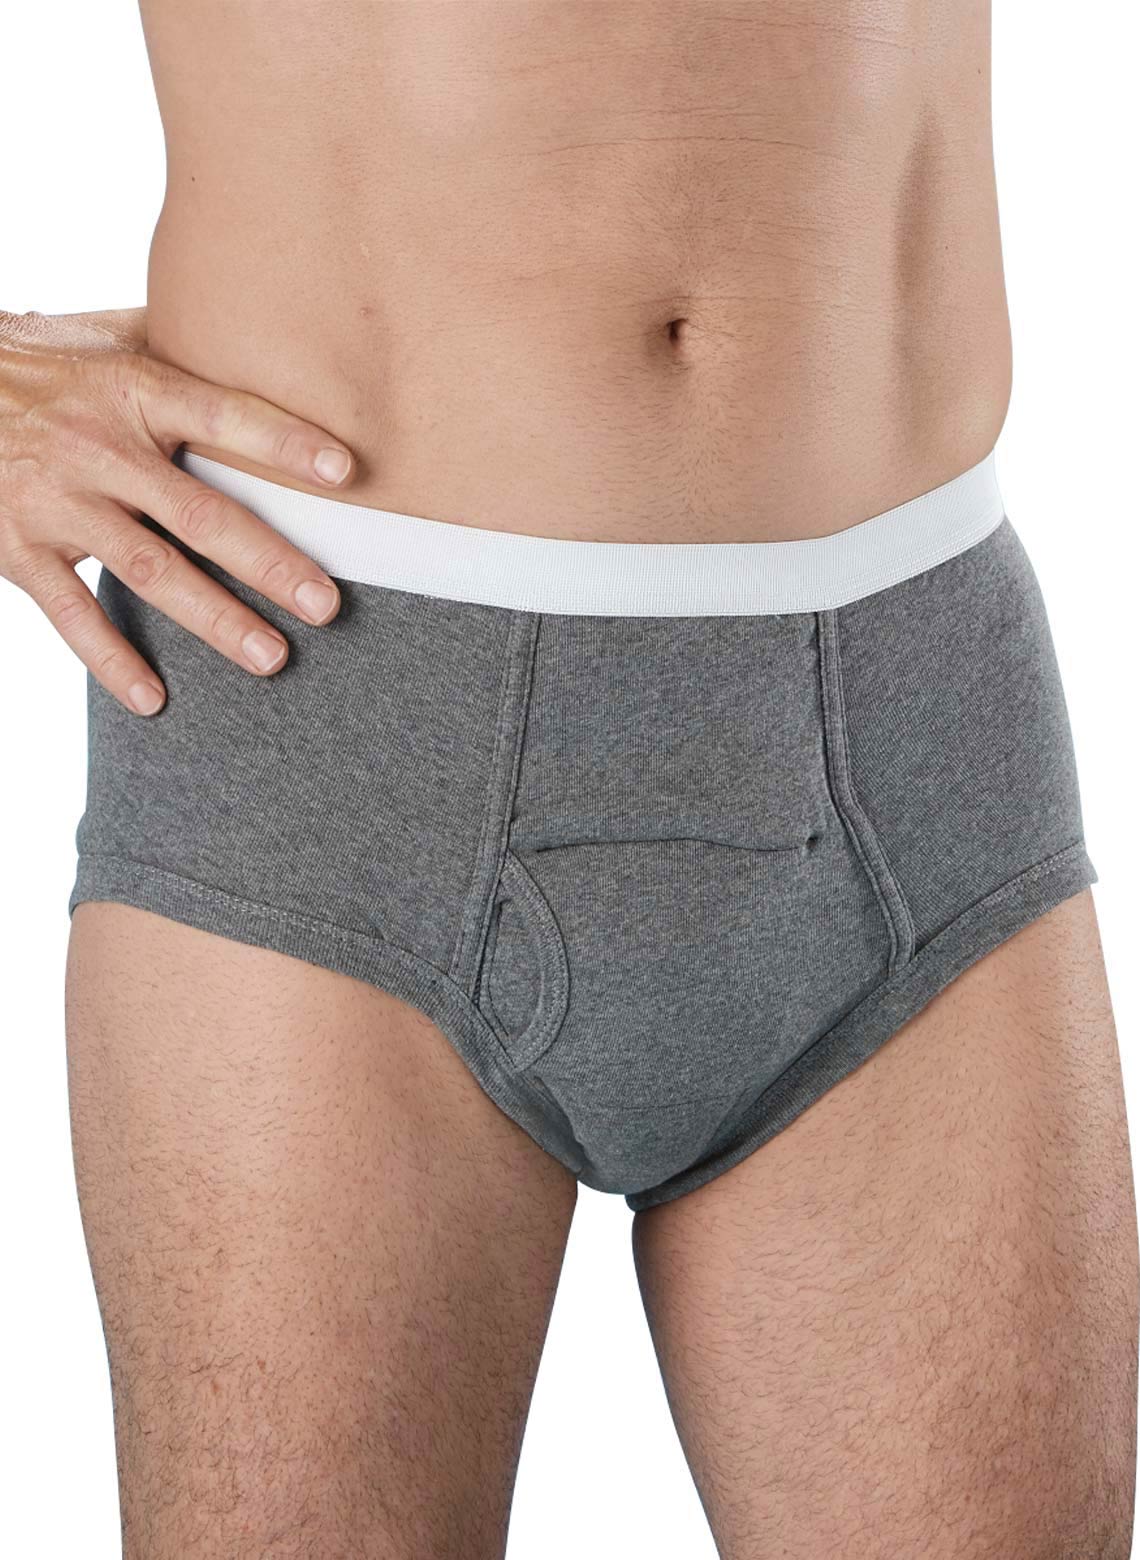 In men wet disposable underwear